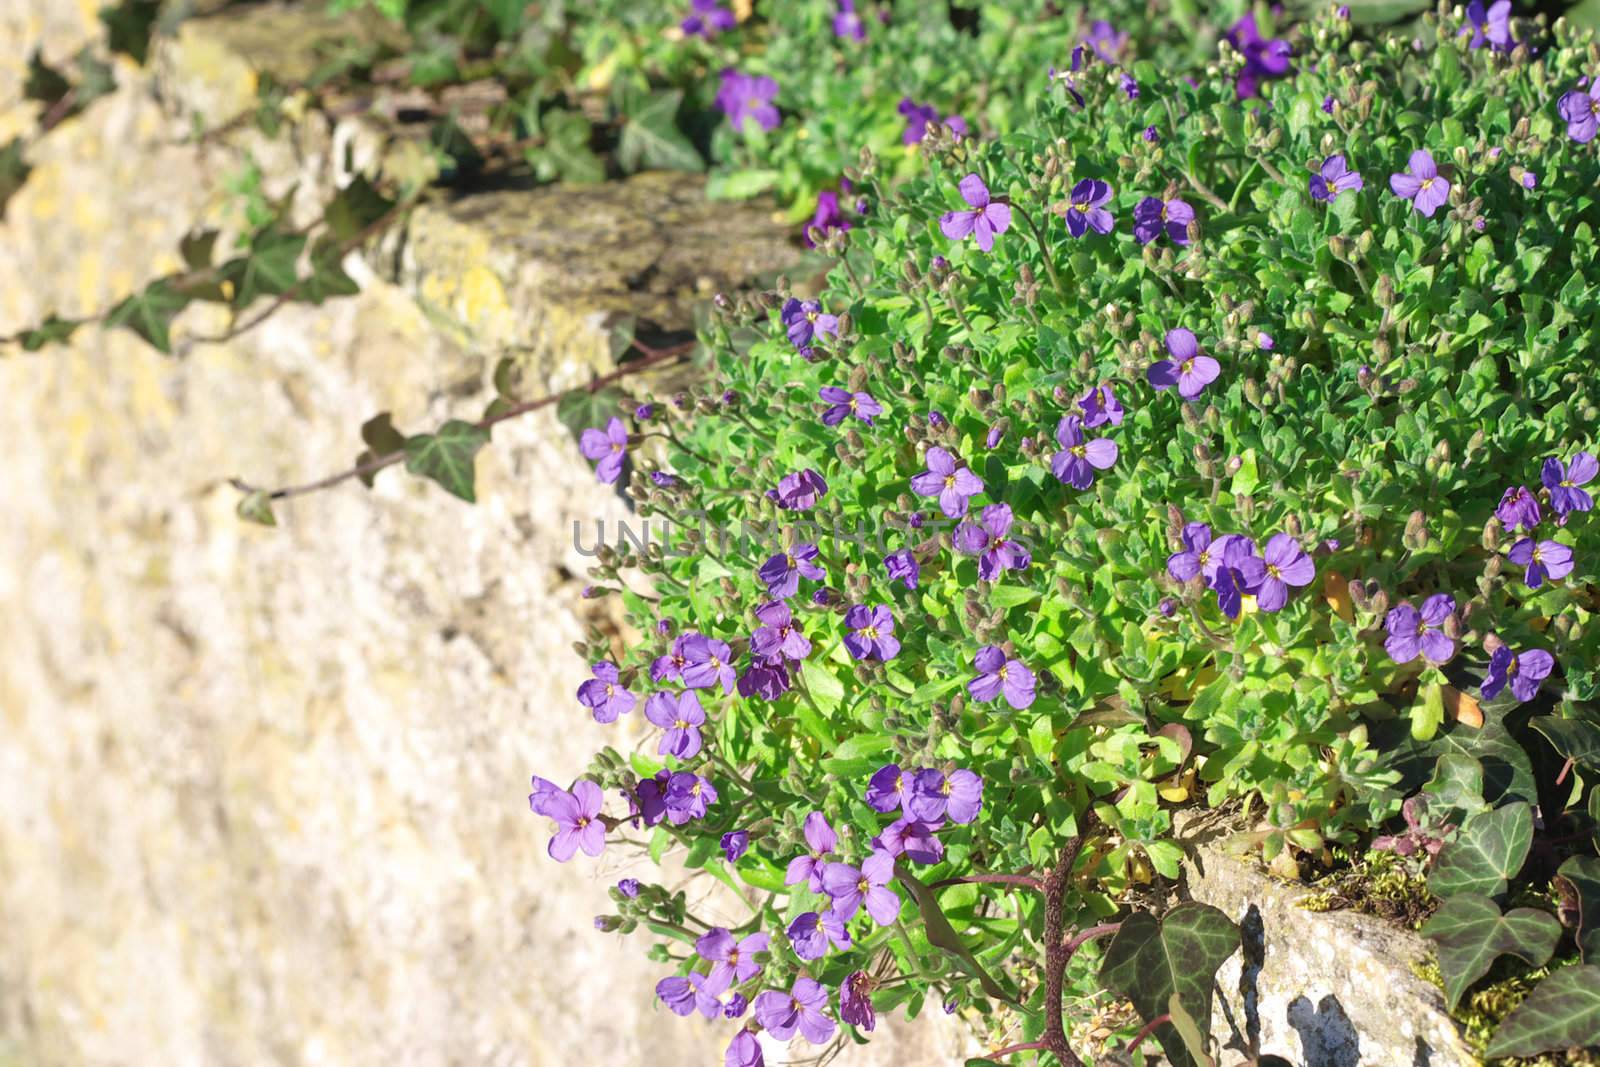 Trailing lilac  lobelia over dry stone wall, focus on flowers